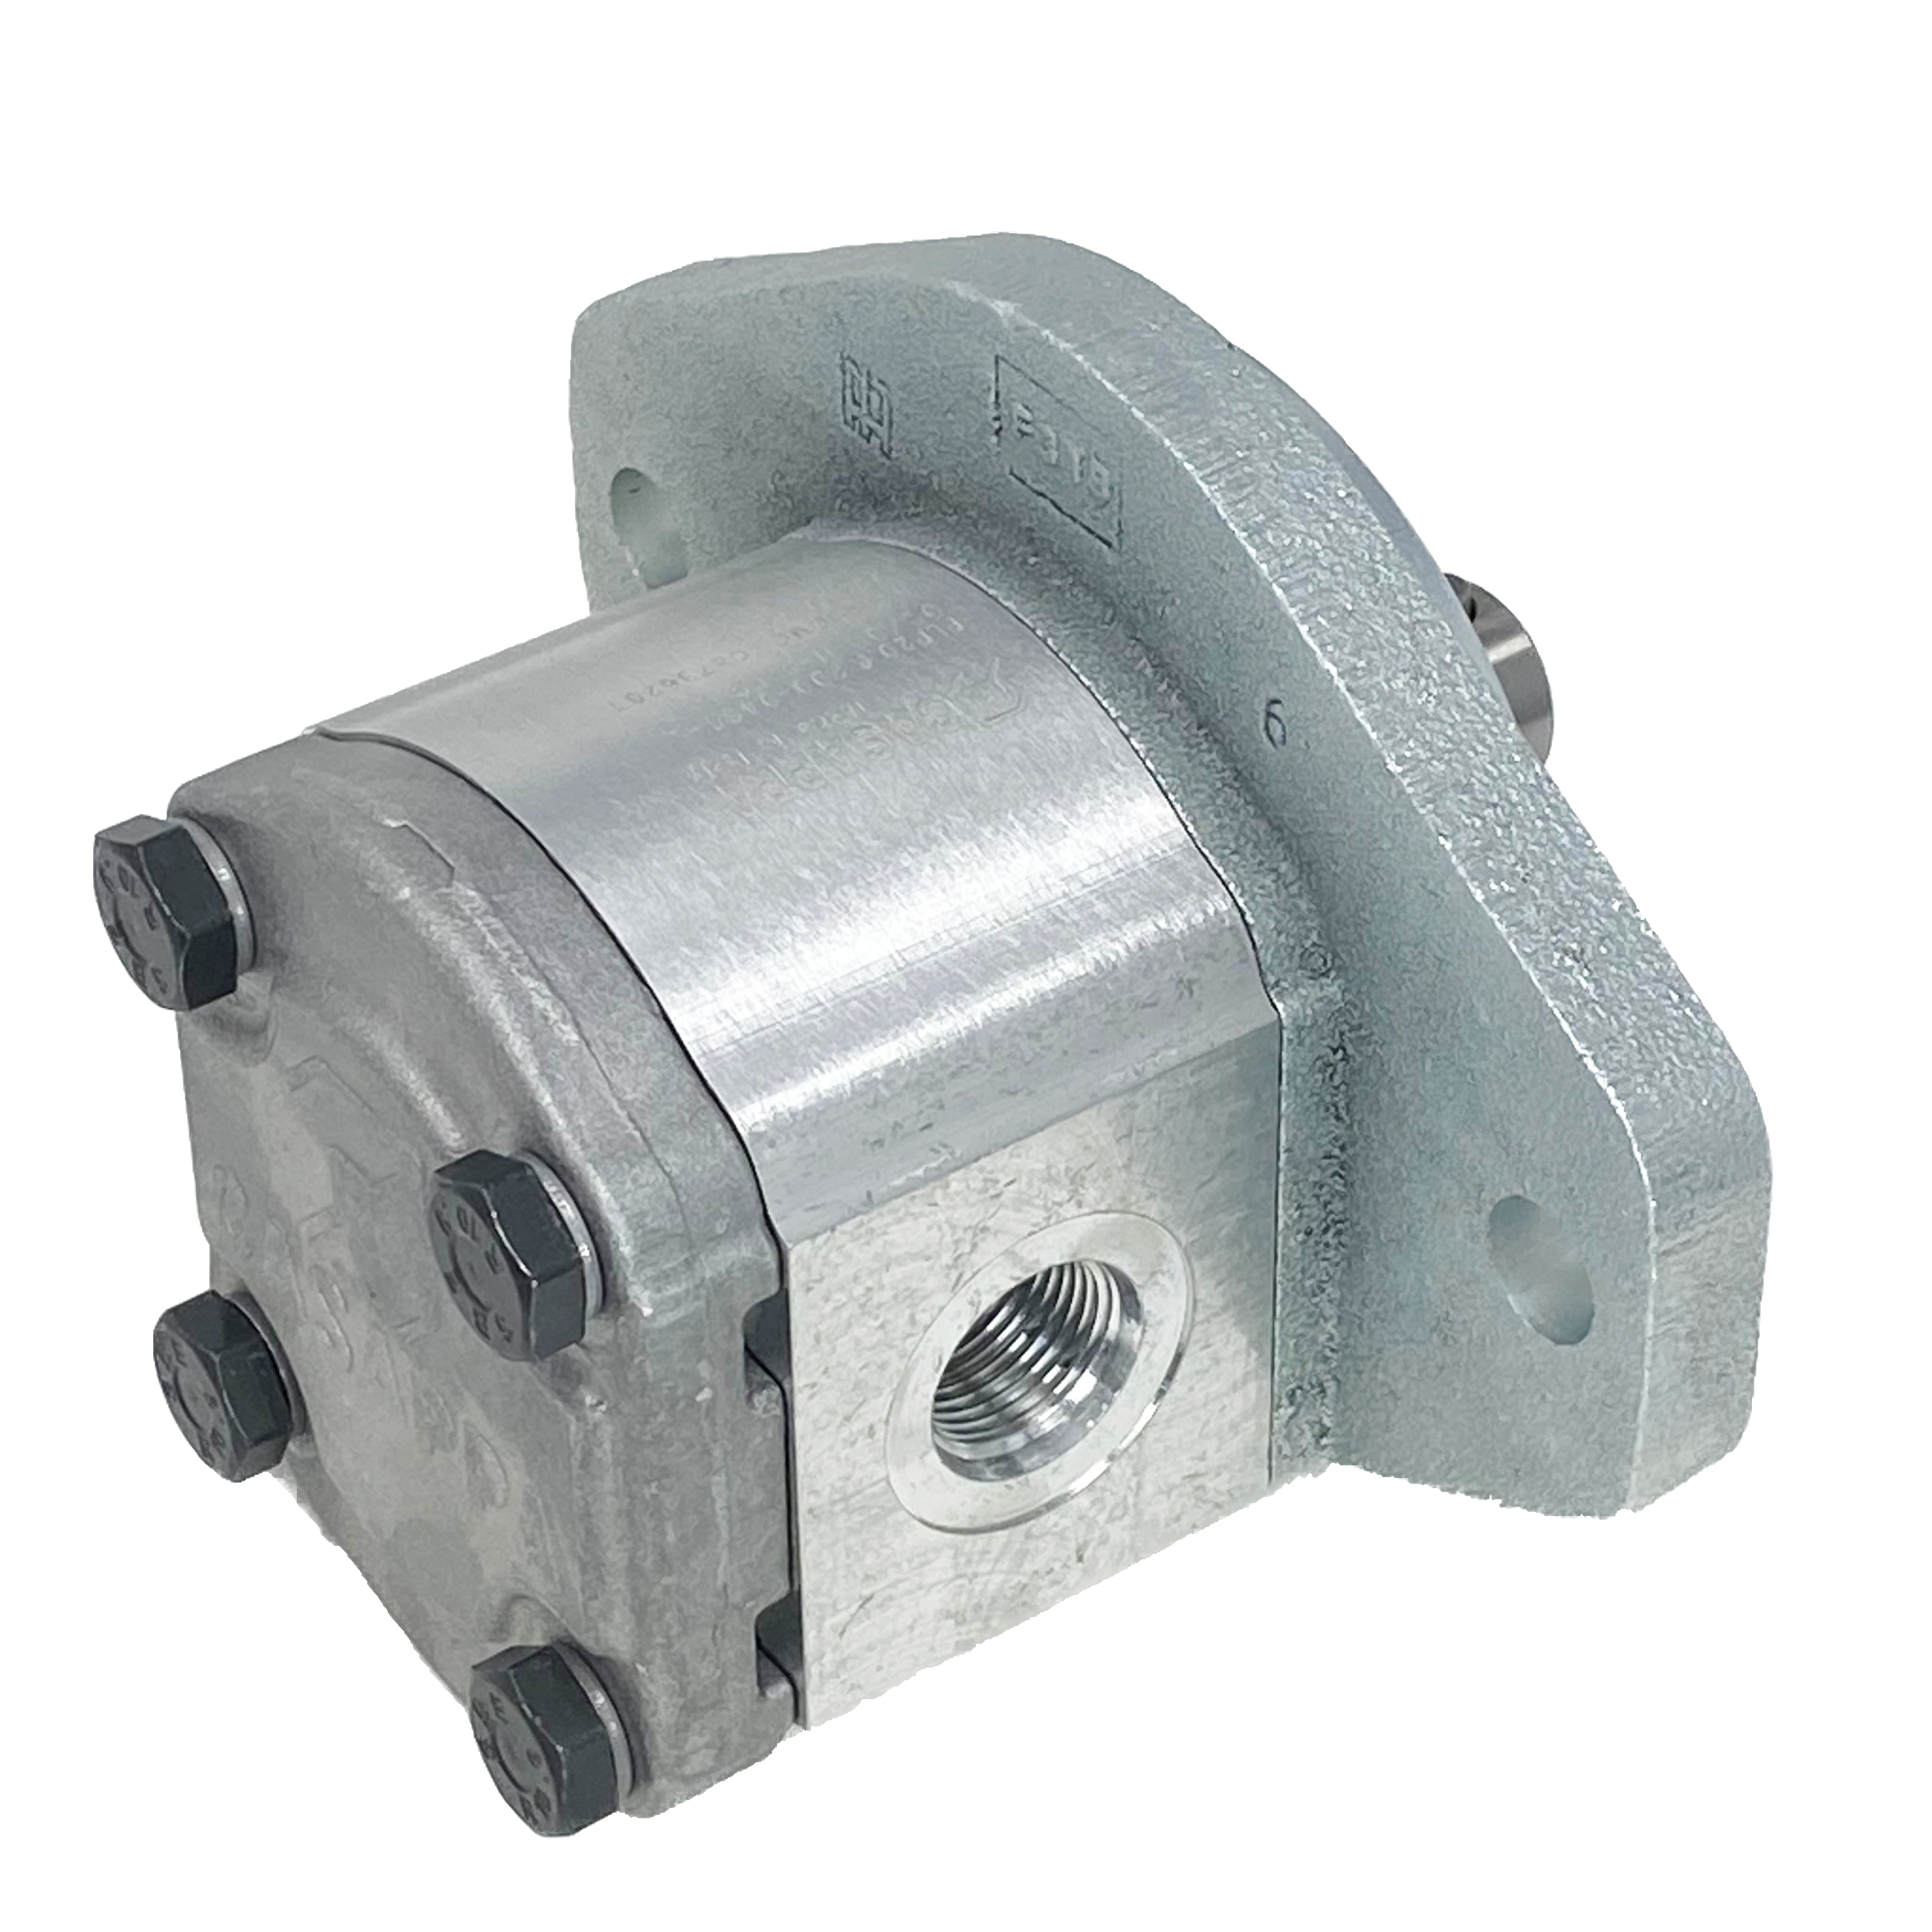 PLM20.11,2R0-32S5-LOC/OC-N-L : Casappa Polaris Gear Motor, 11.23cc, 3625psi, 3500RPM, Reversible, External Drain, 3/4" Bore x 1/4" Key Shaft, SAE B 2-Bolt Flange, 0.625 (5/8") #10 SAE In, 0.625 (5/8") #10 SAE Out, Aluminum Body, Cast Iron Flange